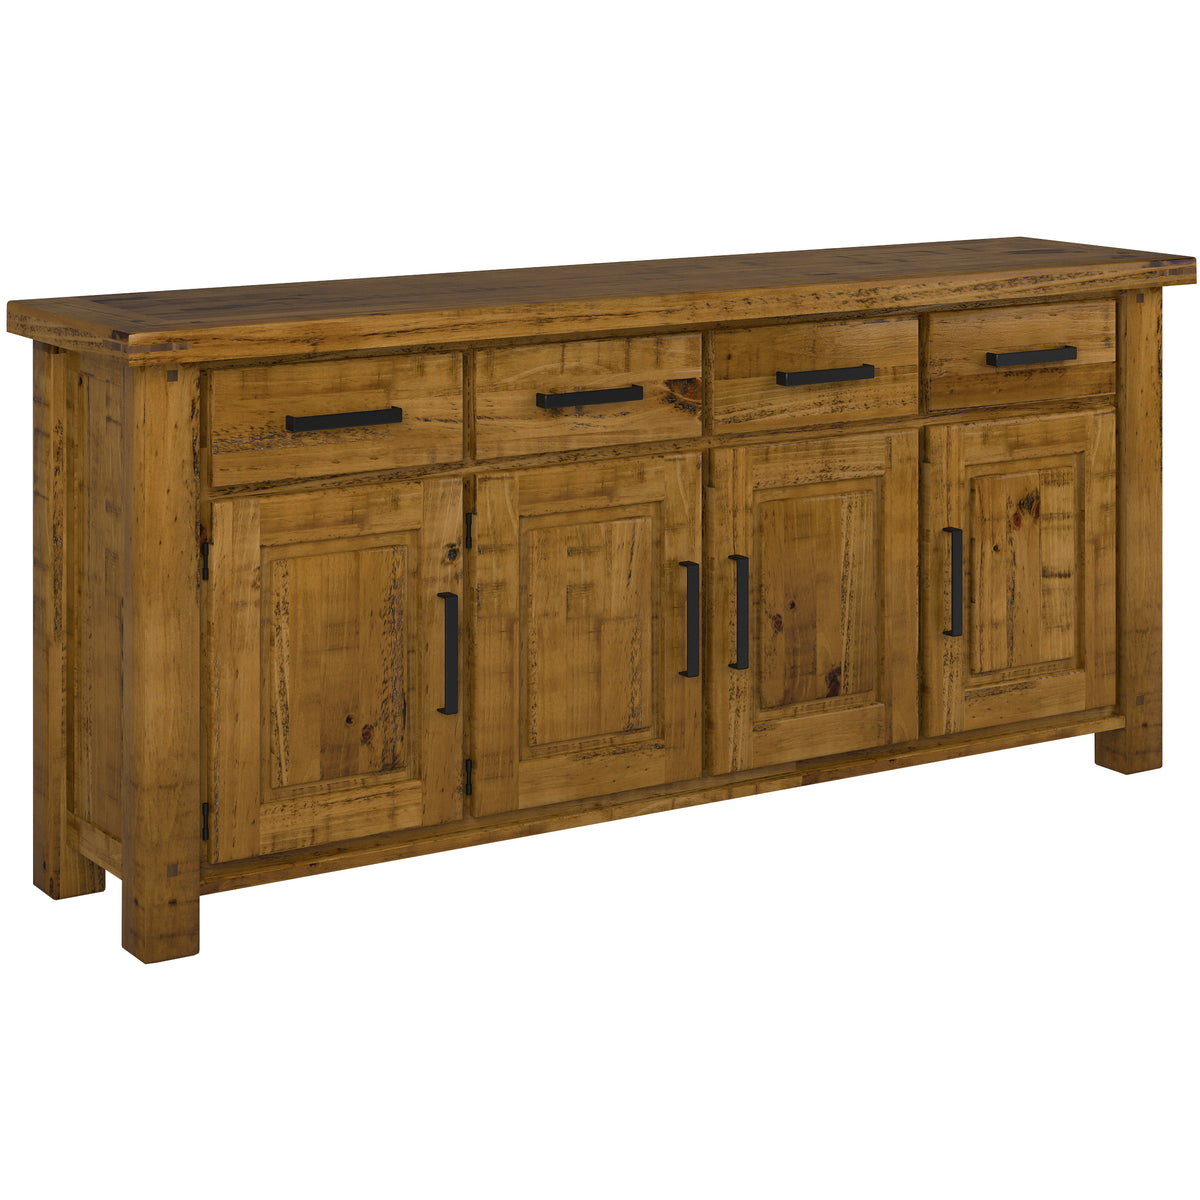 Teasel Buffet Table 191cm 4 Door 4 Drawer Solid Pine Timber Wood - Rustic Oak